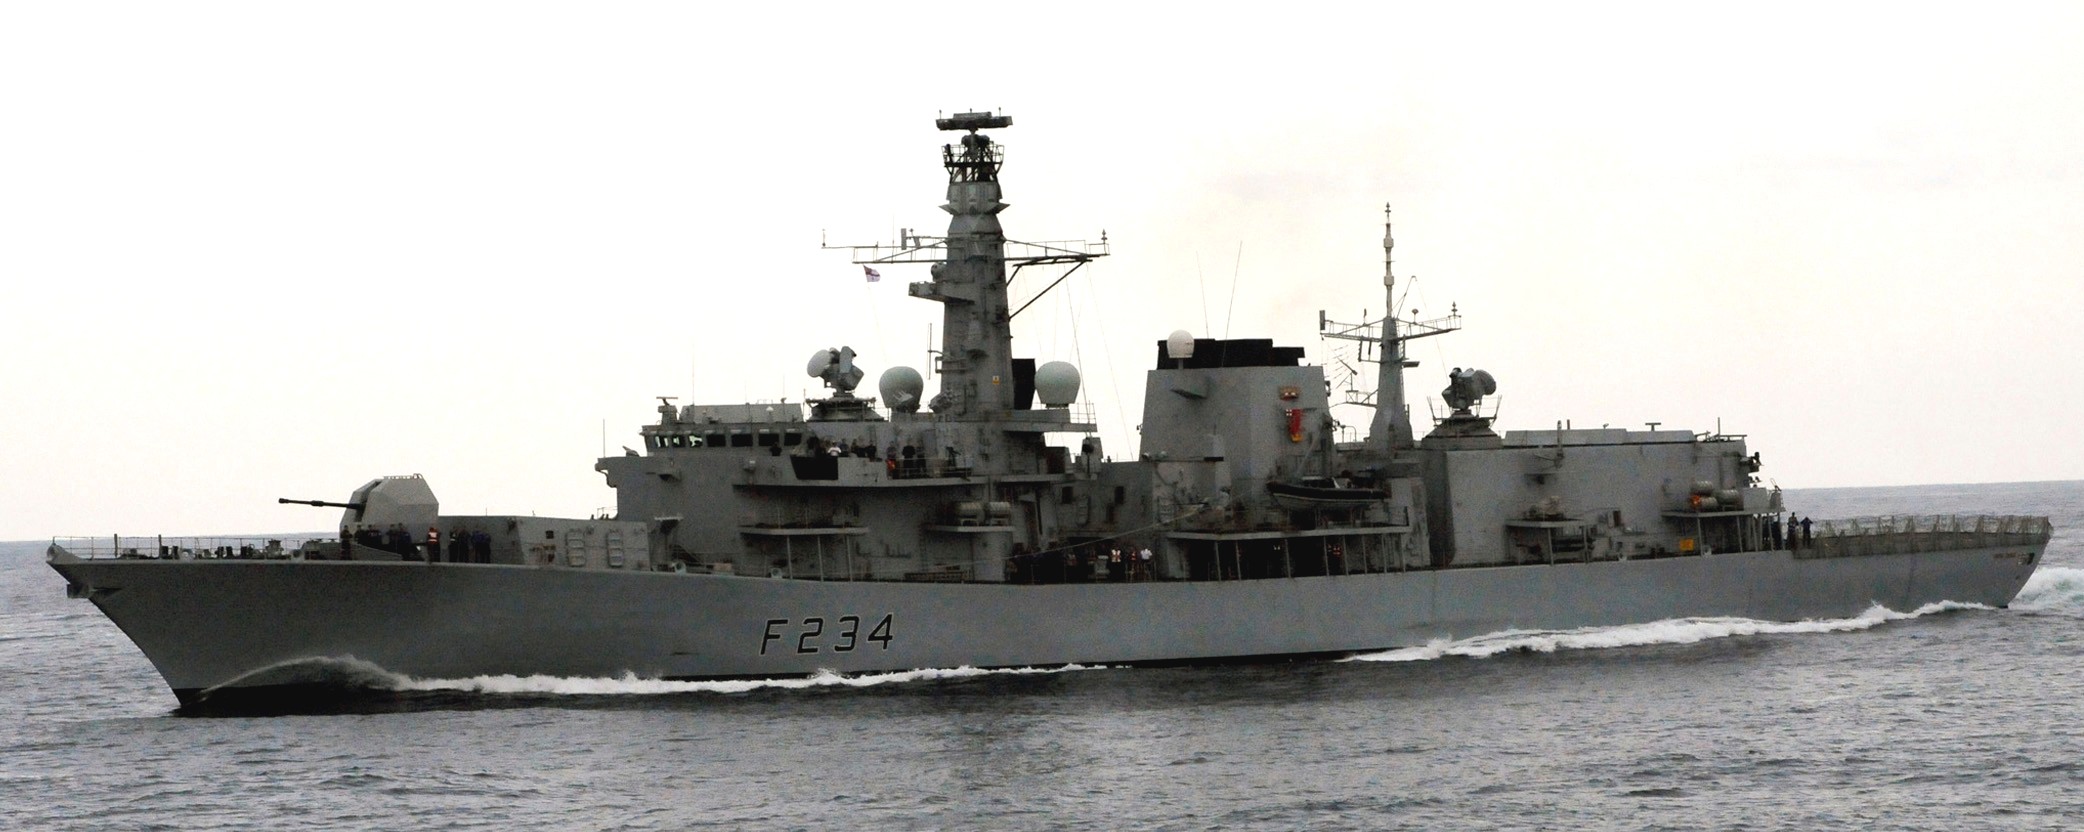 f-234 hms iron duke type 23 duke class guided missile frigate royal navy 16